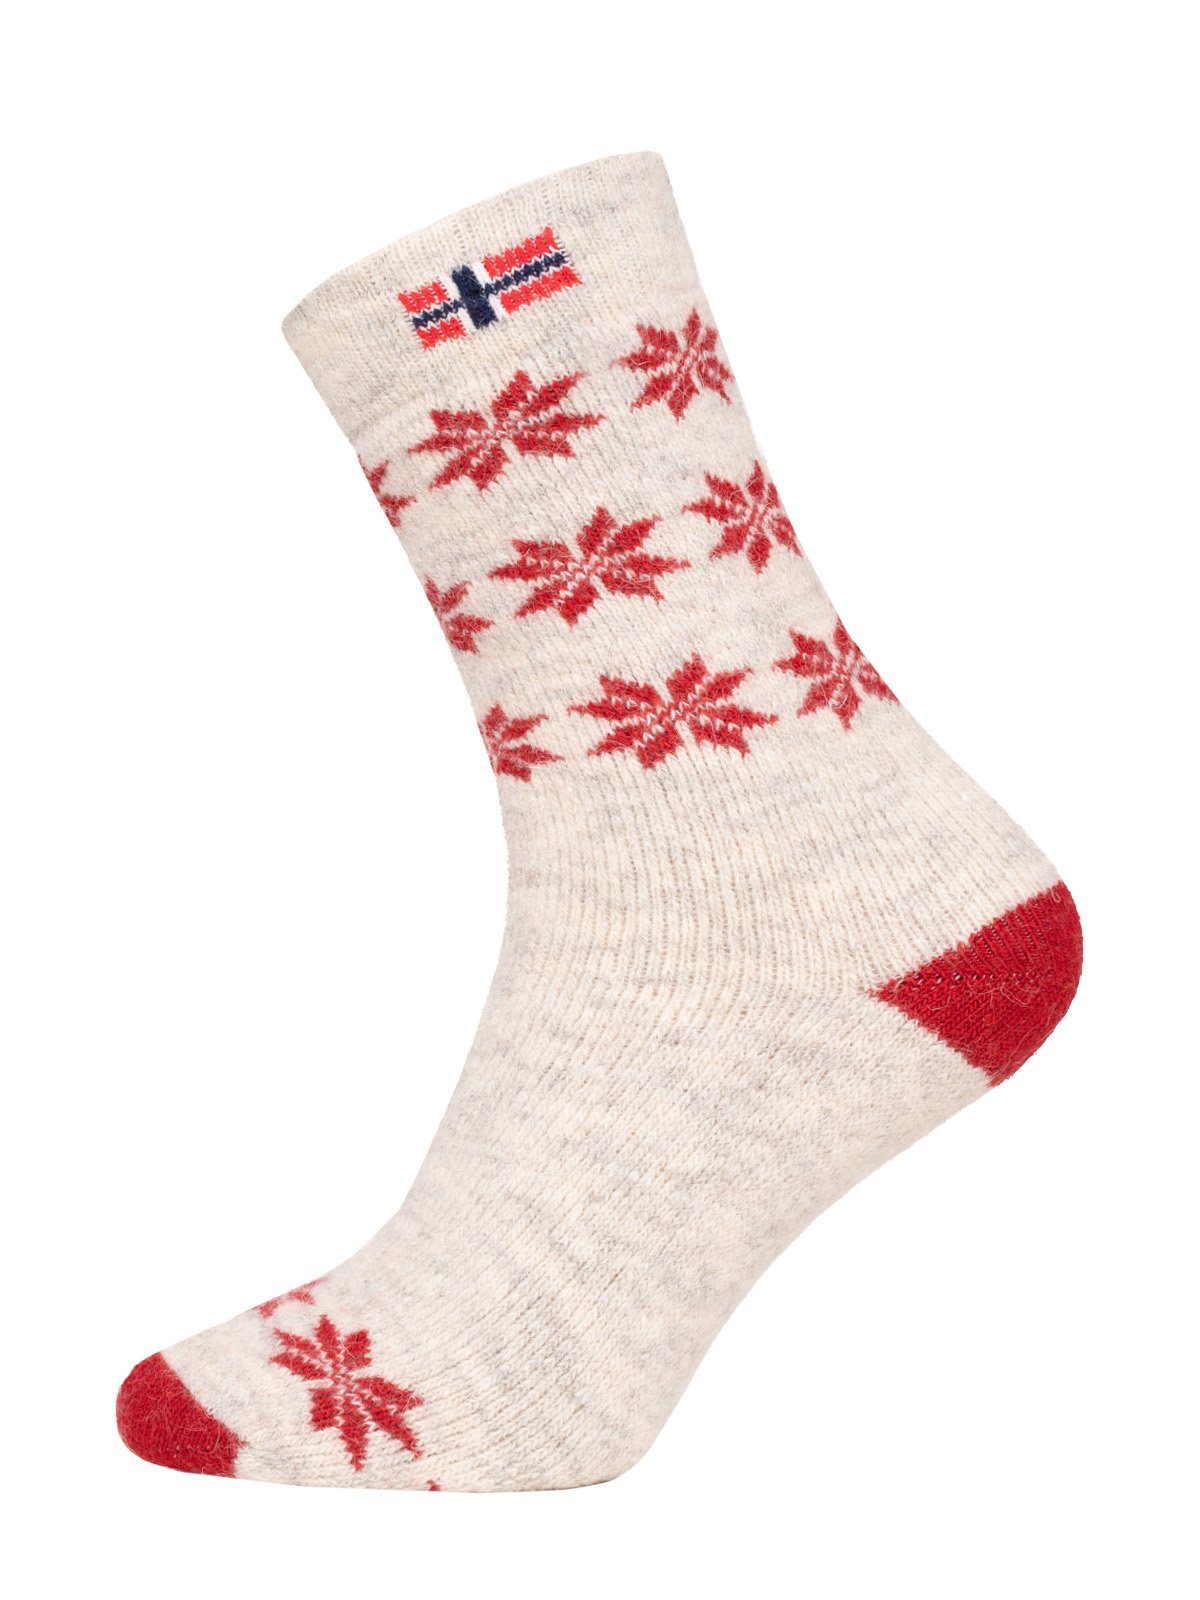 Warm HomeOfSocks Kuschelsocken "Snowflake Nordic Hyggelig Socken 80% Skandinavische Wollanteil Rot Wollsocke Design Norwegen" Hoher Socken Norwegischem Dicke